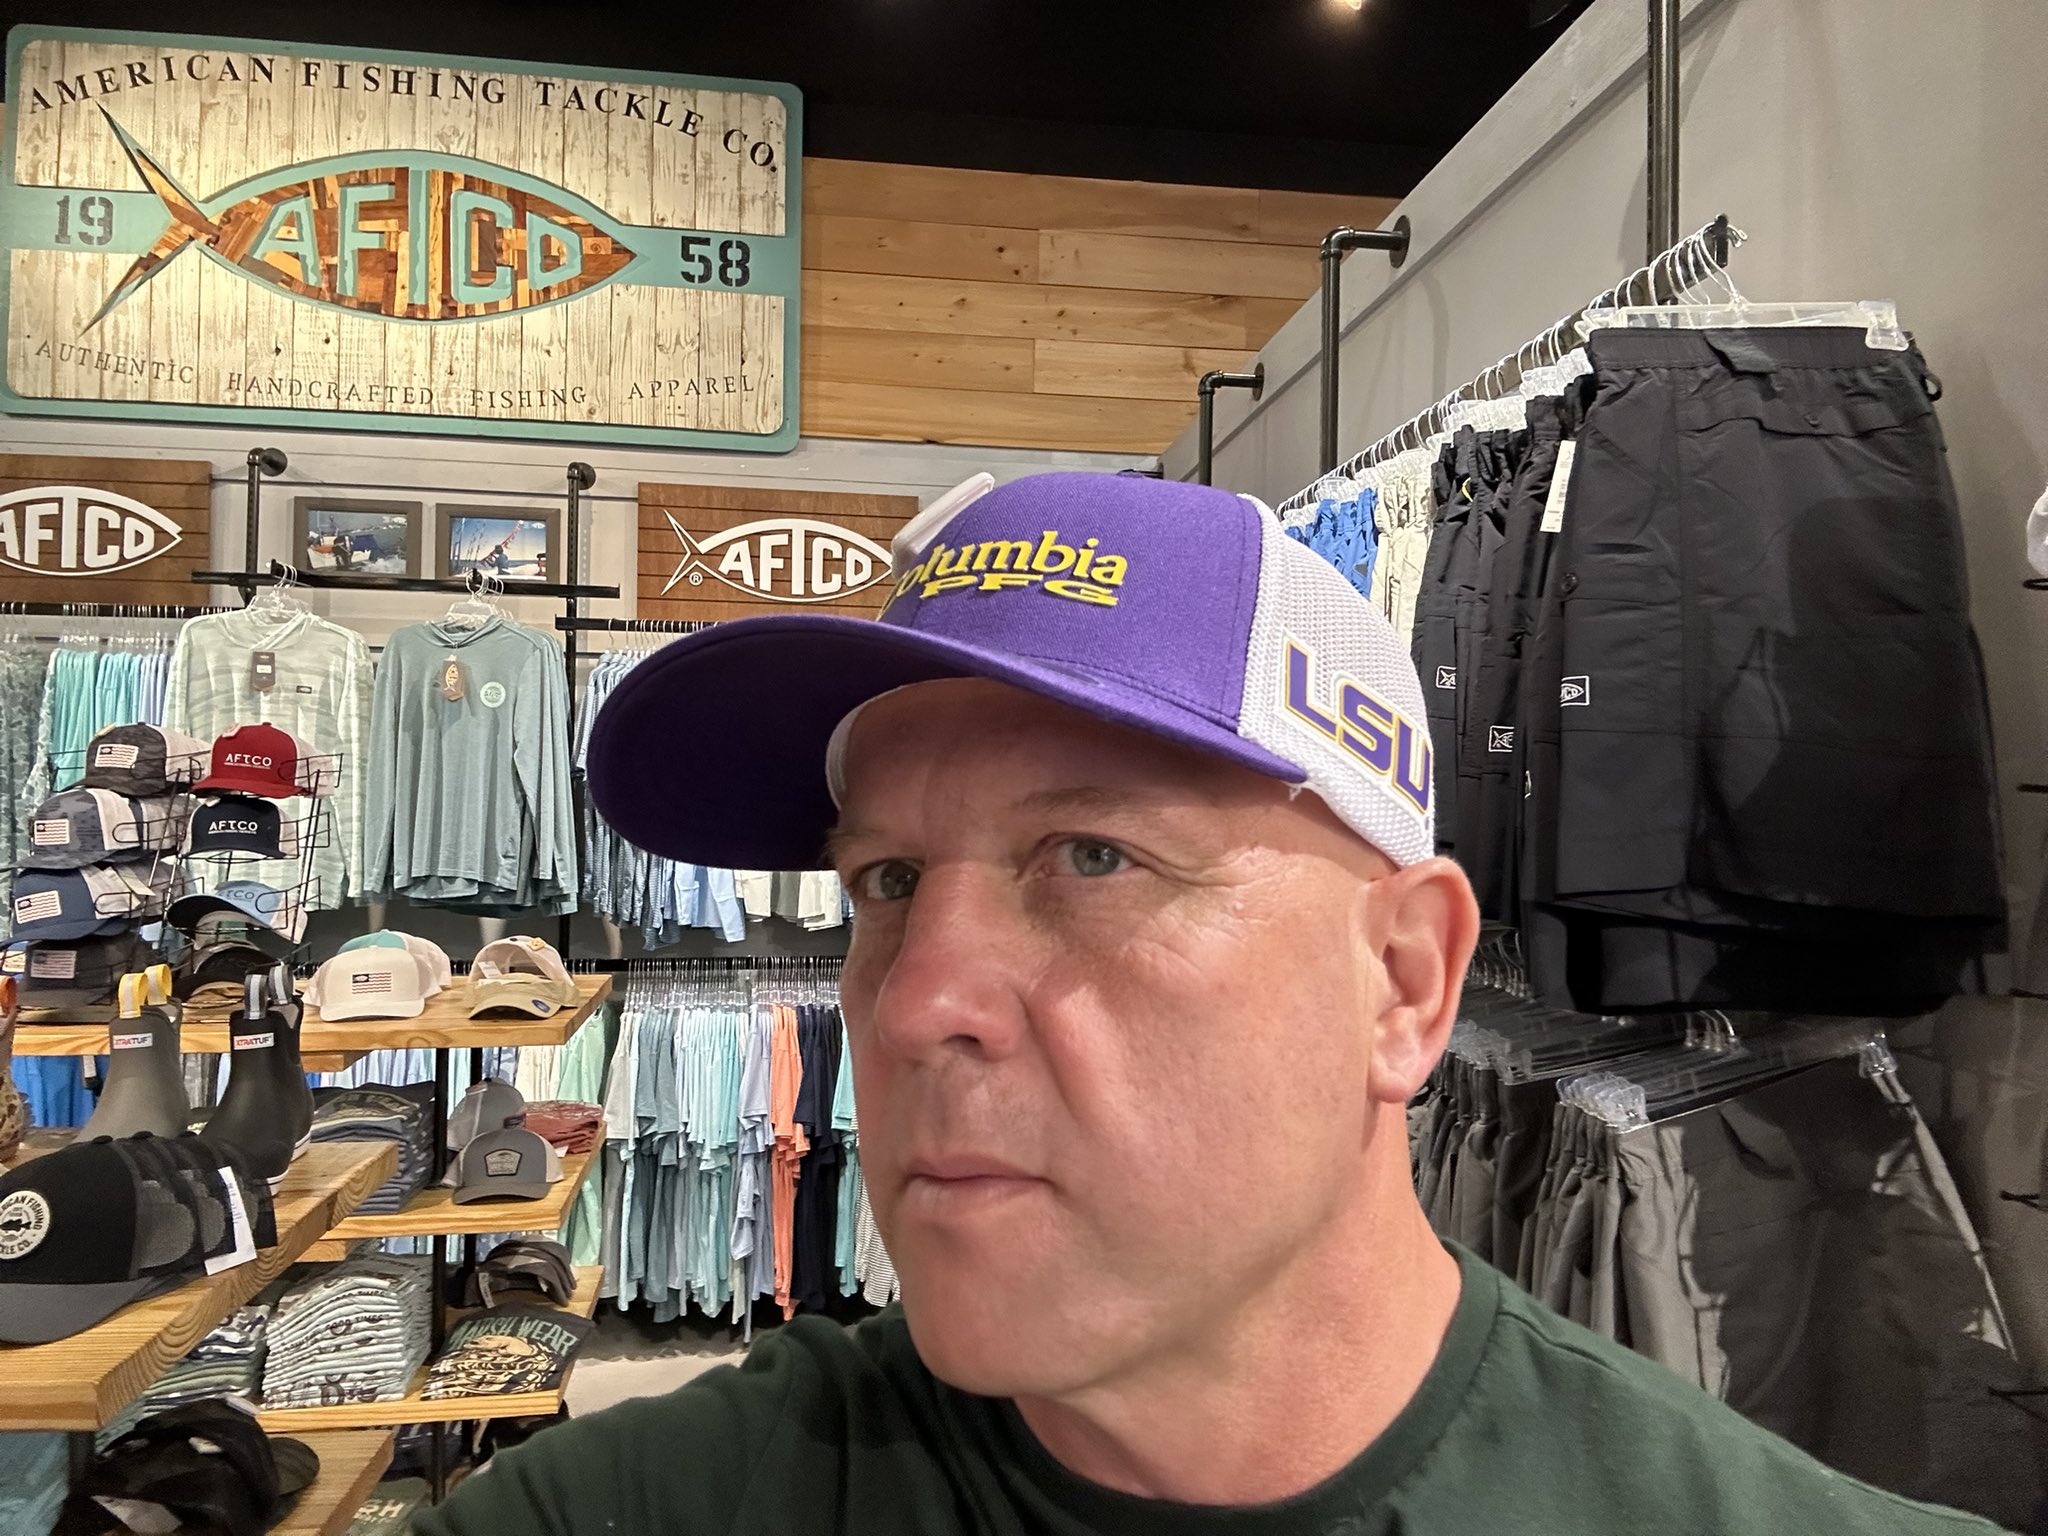 Tim Meek on X: If I buy this hat is that a jinx in anyway